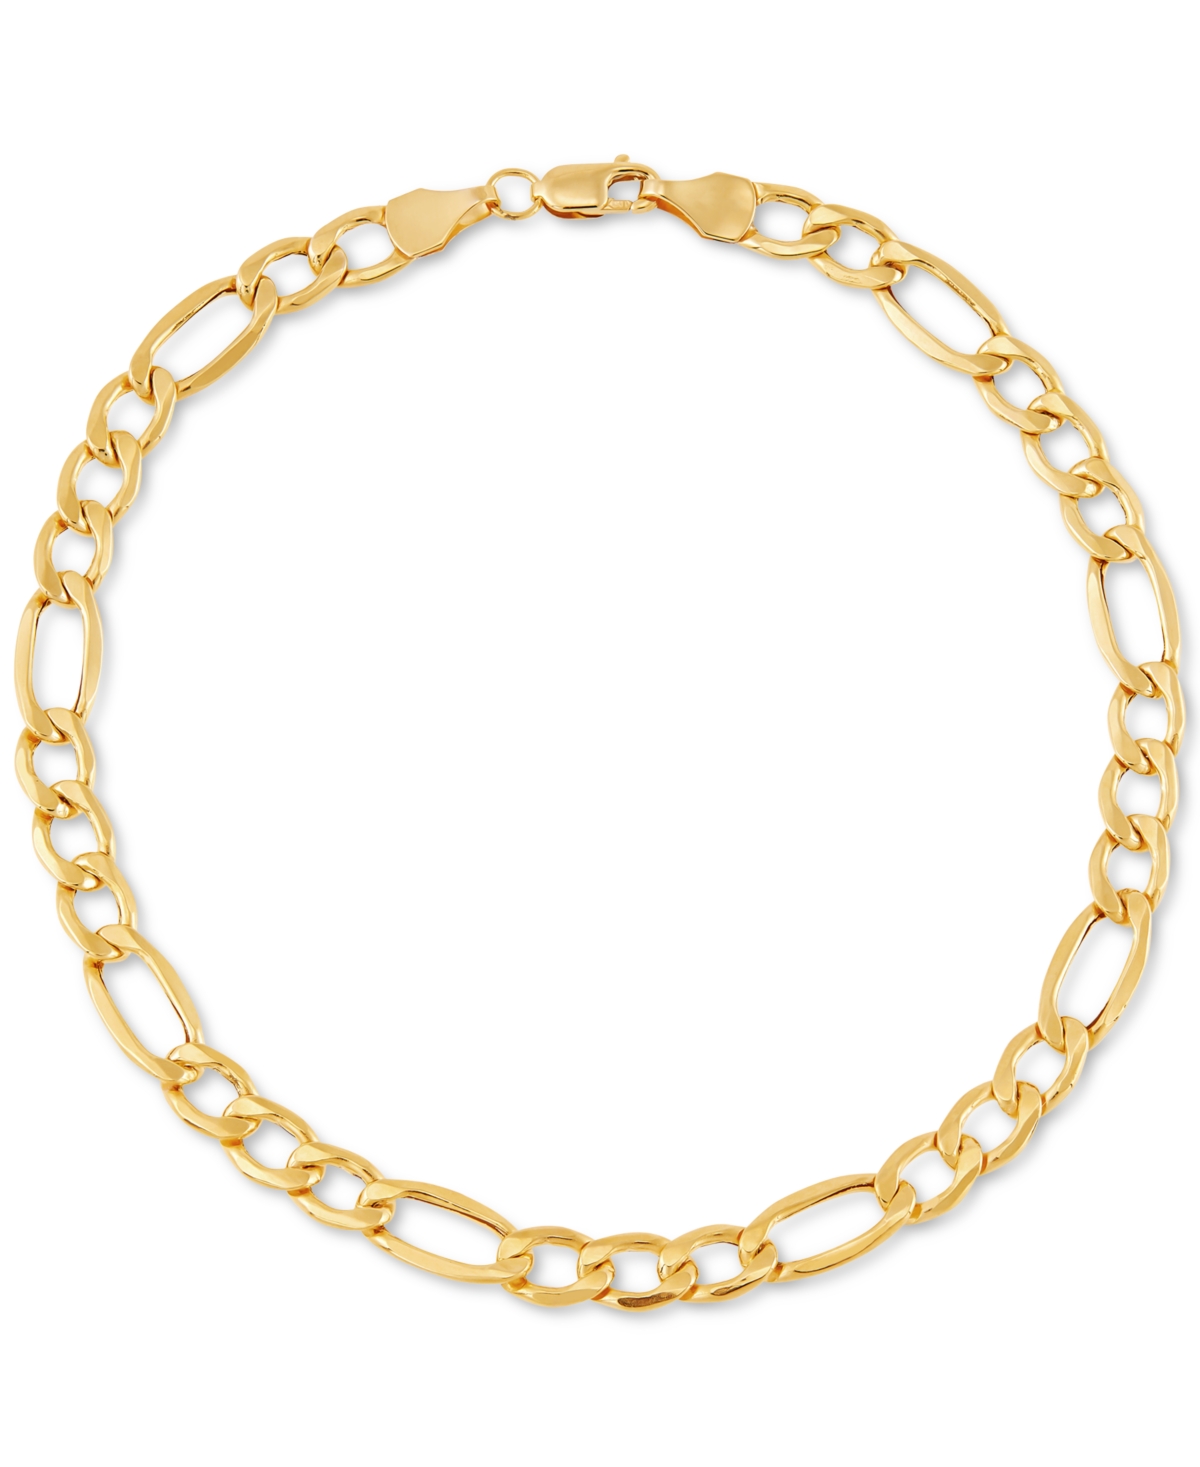 Figaro Link Chain Bracelet in 10k Gold - Gold